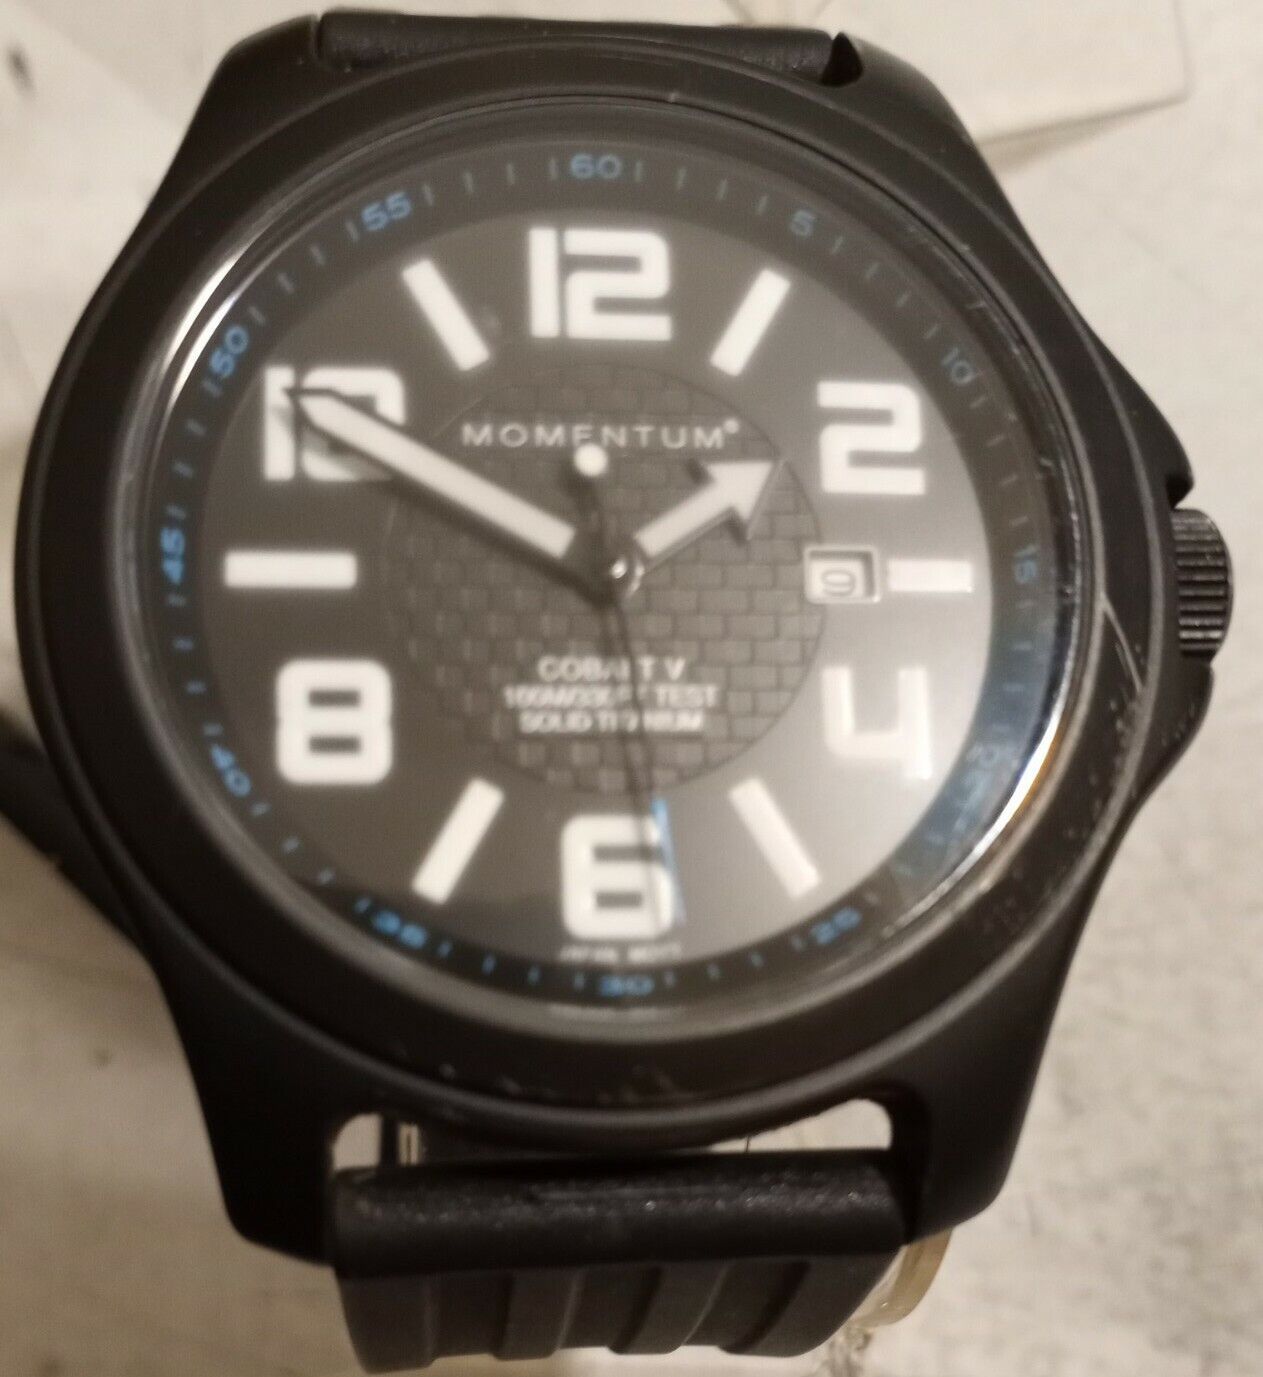  Momentum Cobalt V Titanium Watch with Natural Rubber Strap